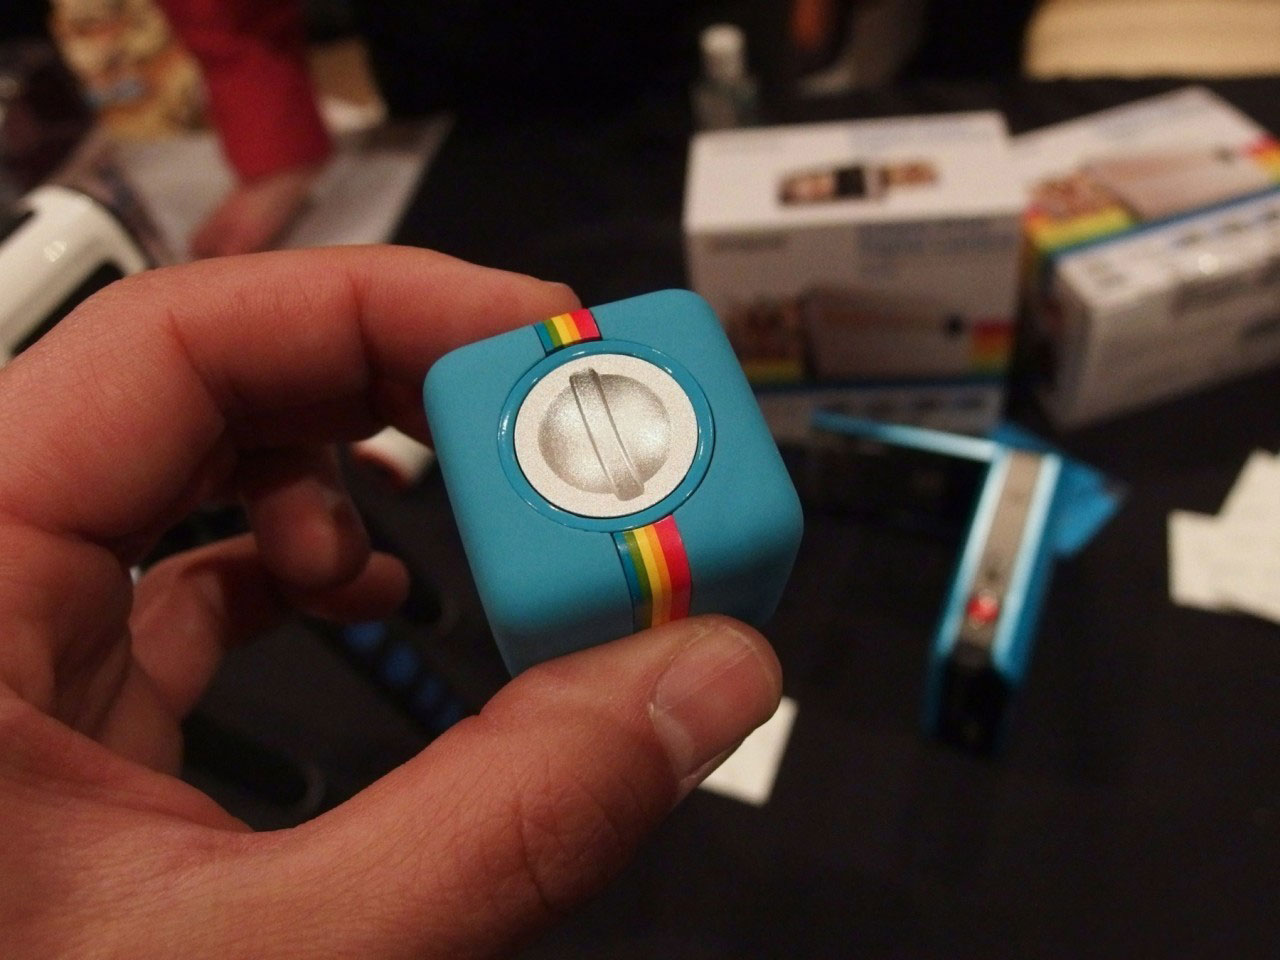 Câmera Polaroid Cube concorrente da GoPro